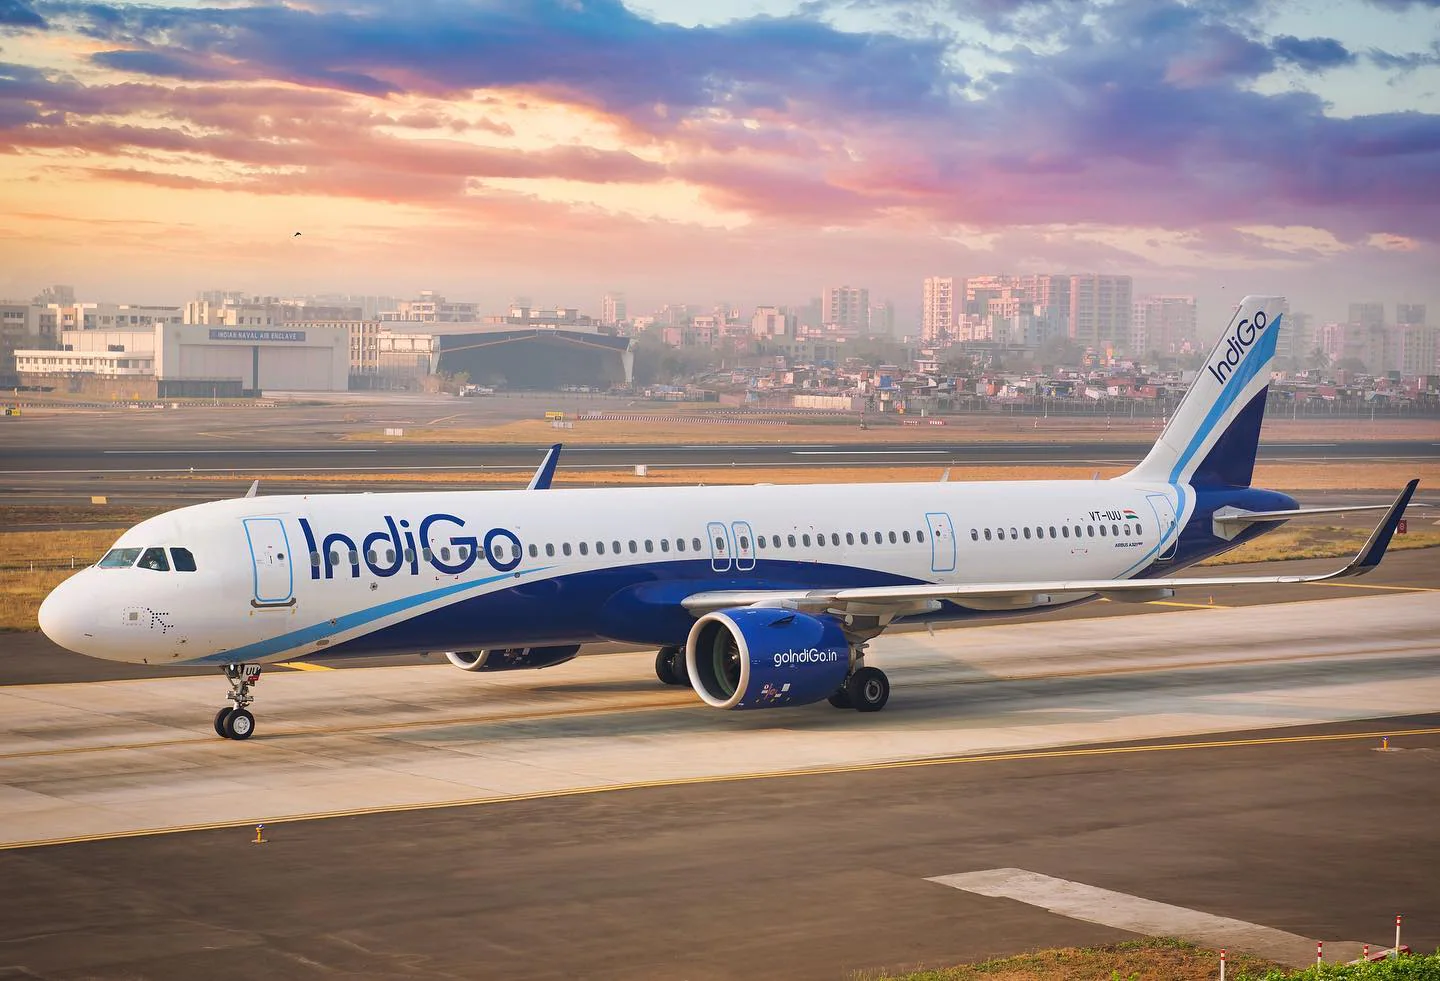 IndiGo to launch direct flights connecting Dubai & Surat from Feb 23